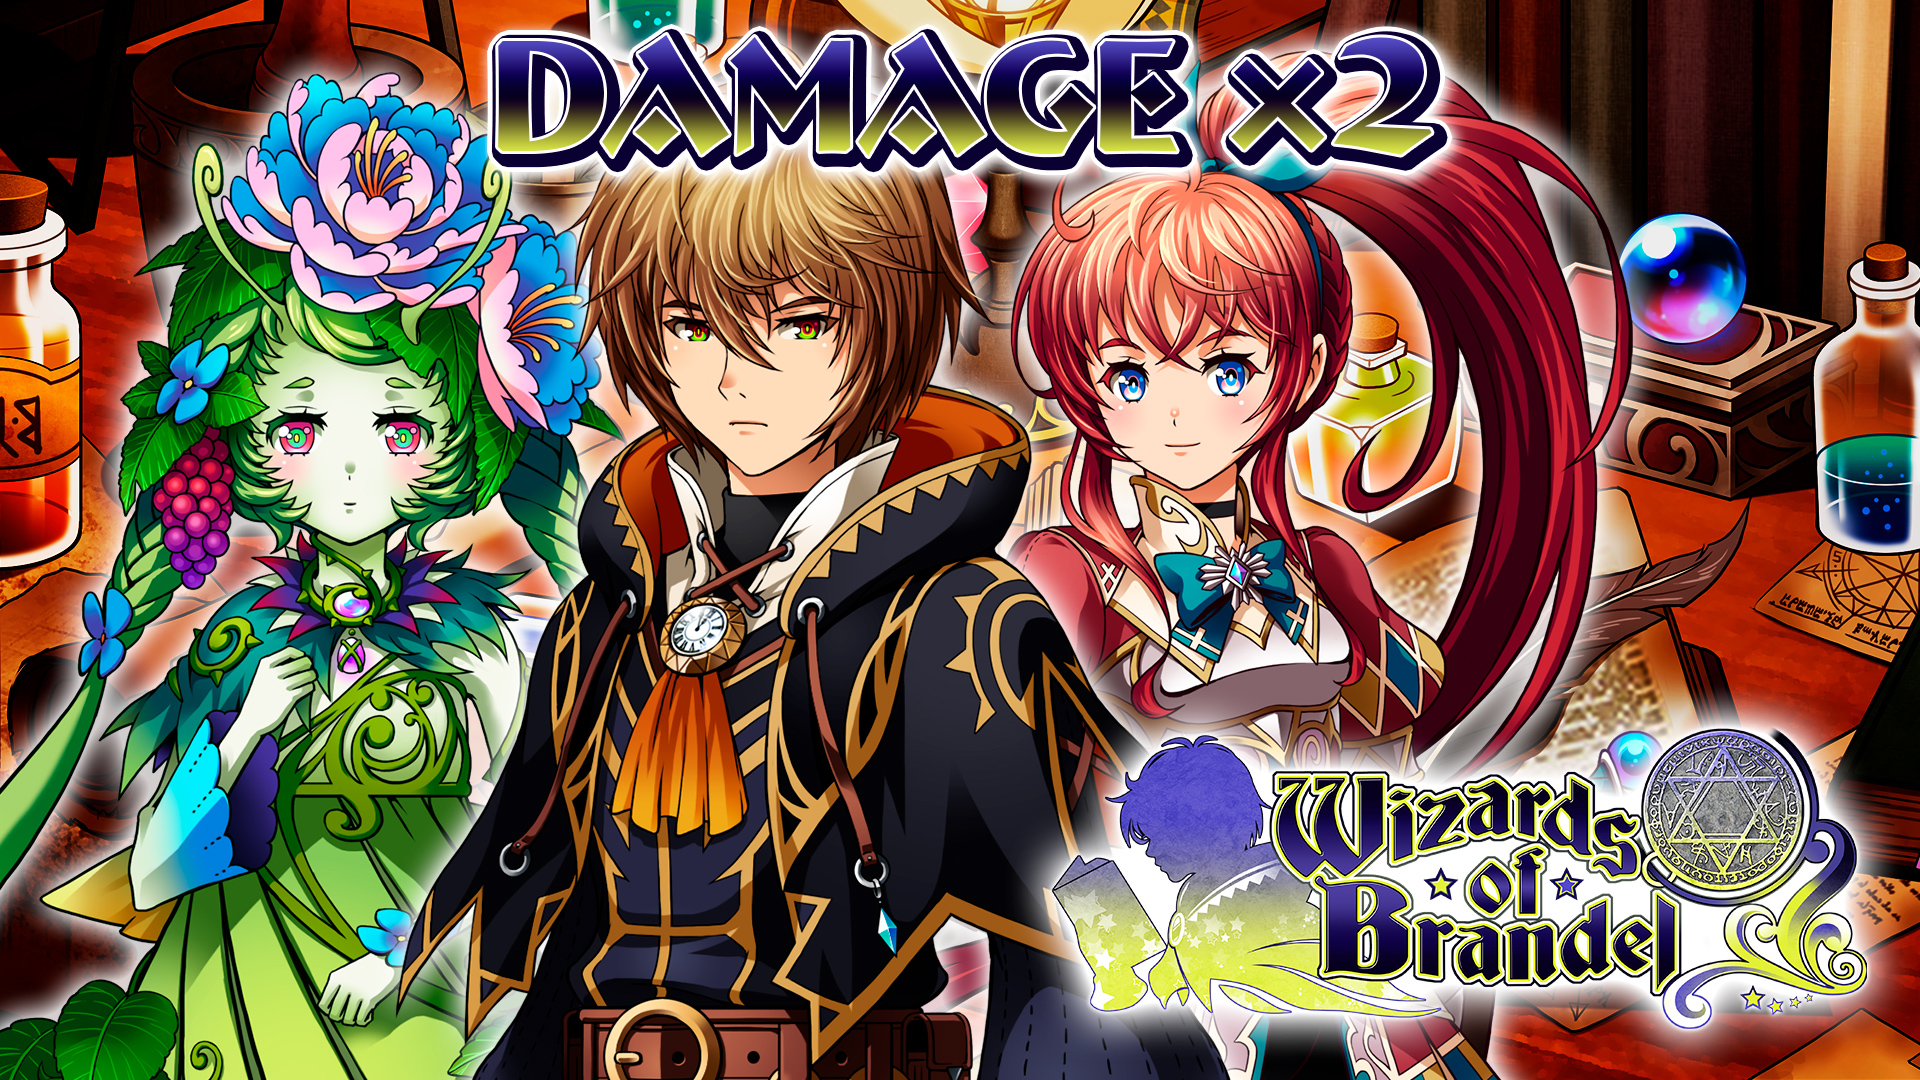 Damage x2 - Wizards of Brandel